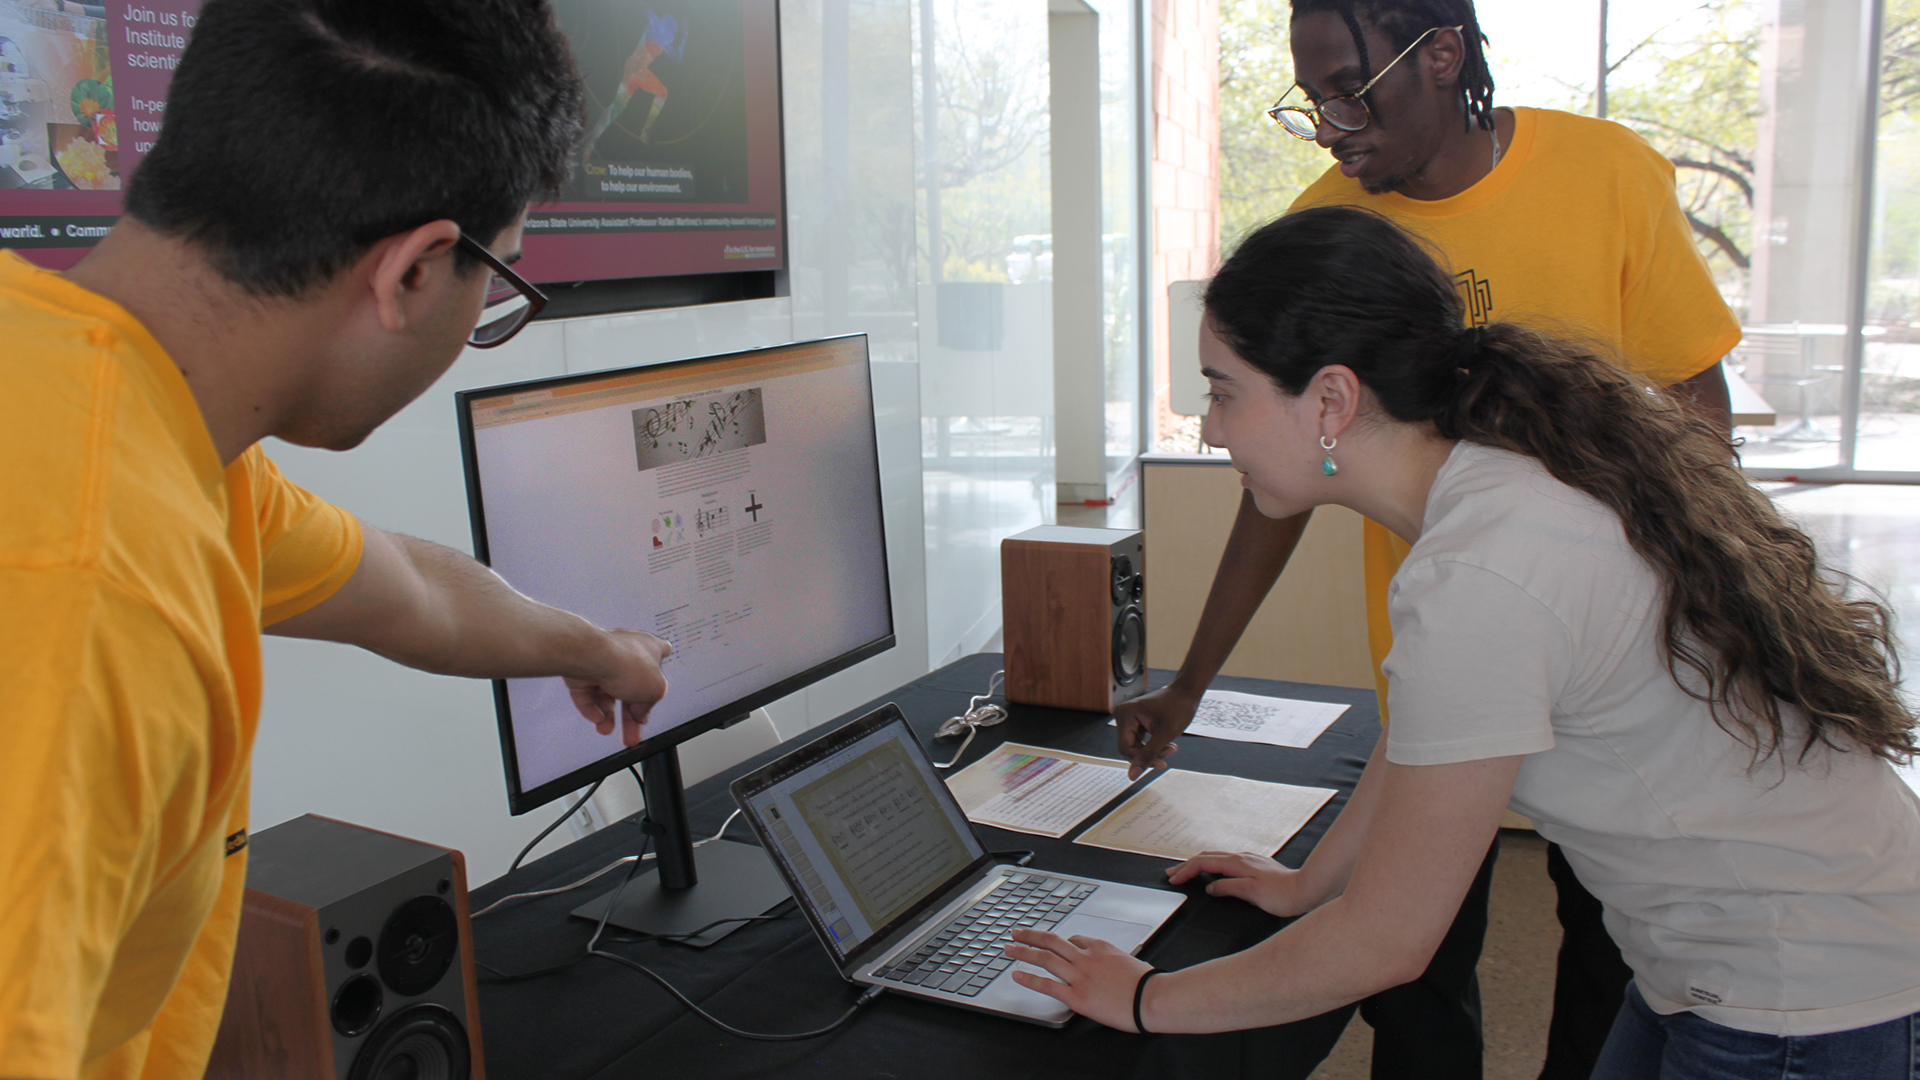 Student volunteers demonstrate software that captures cancer as music at ASU Open Door event.